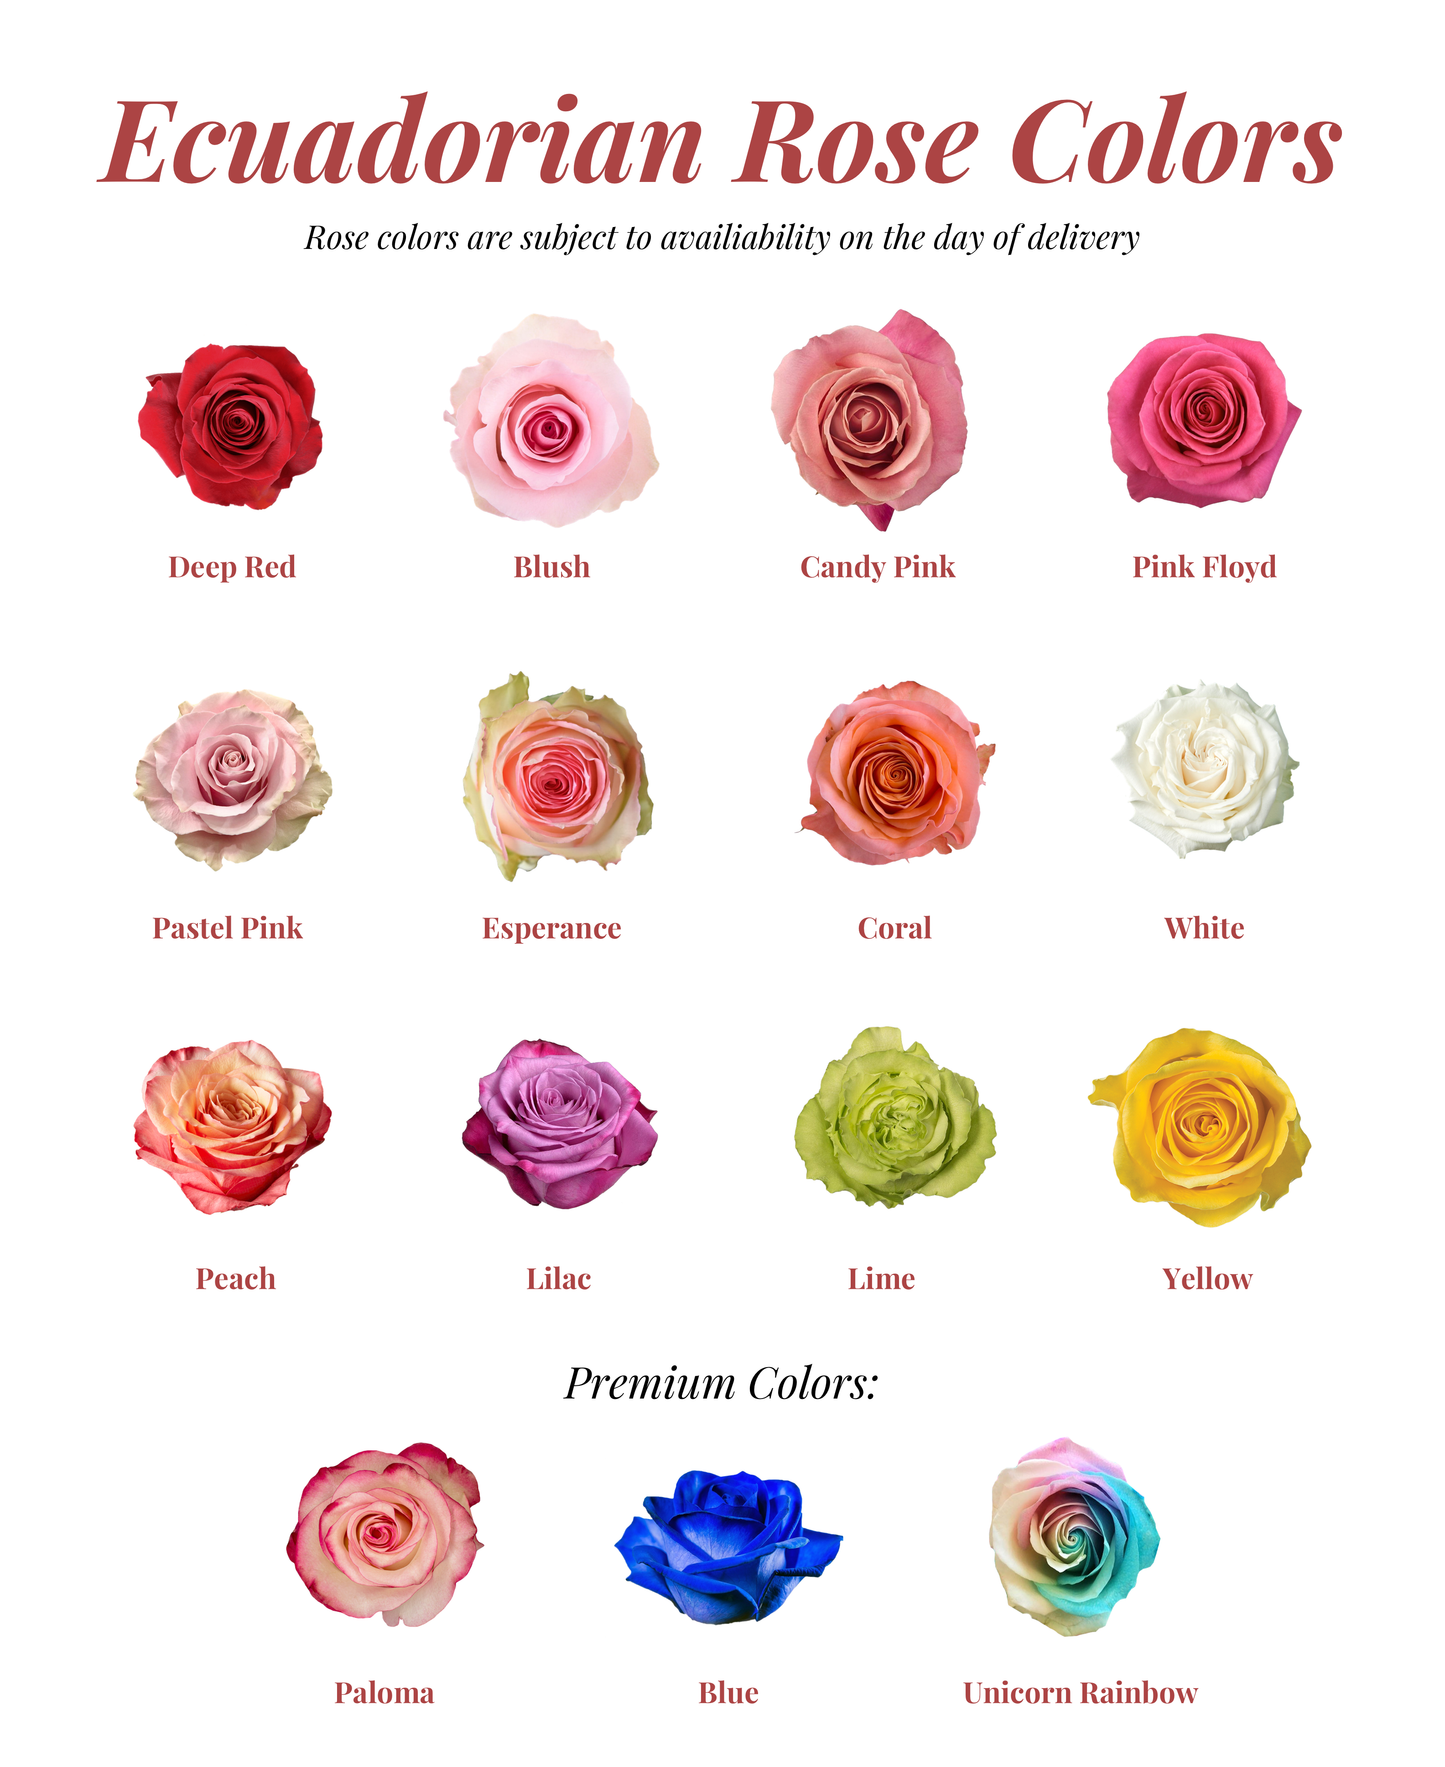 Ecuadorian Rose Bouquet